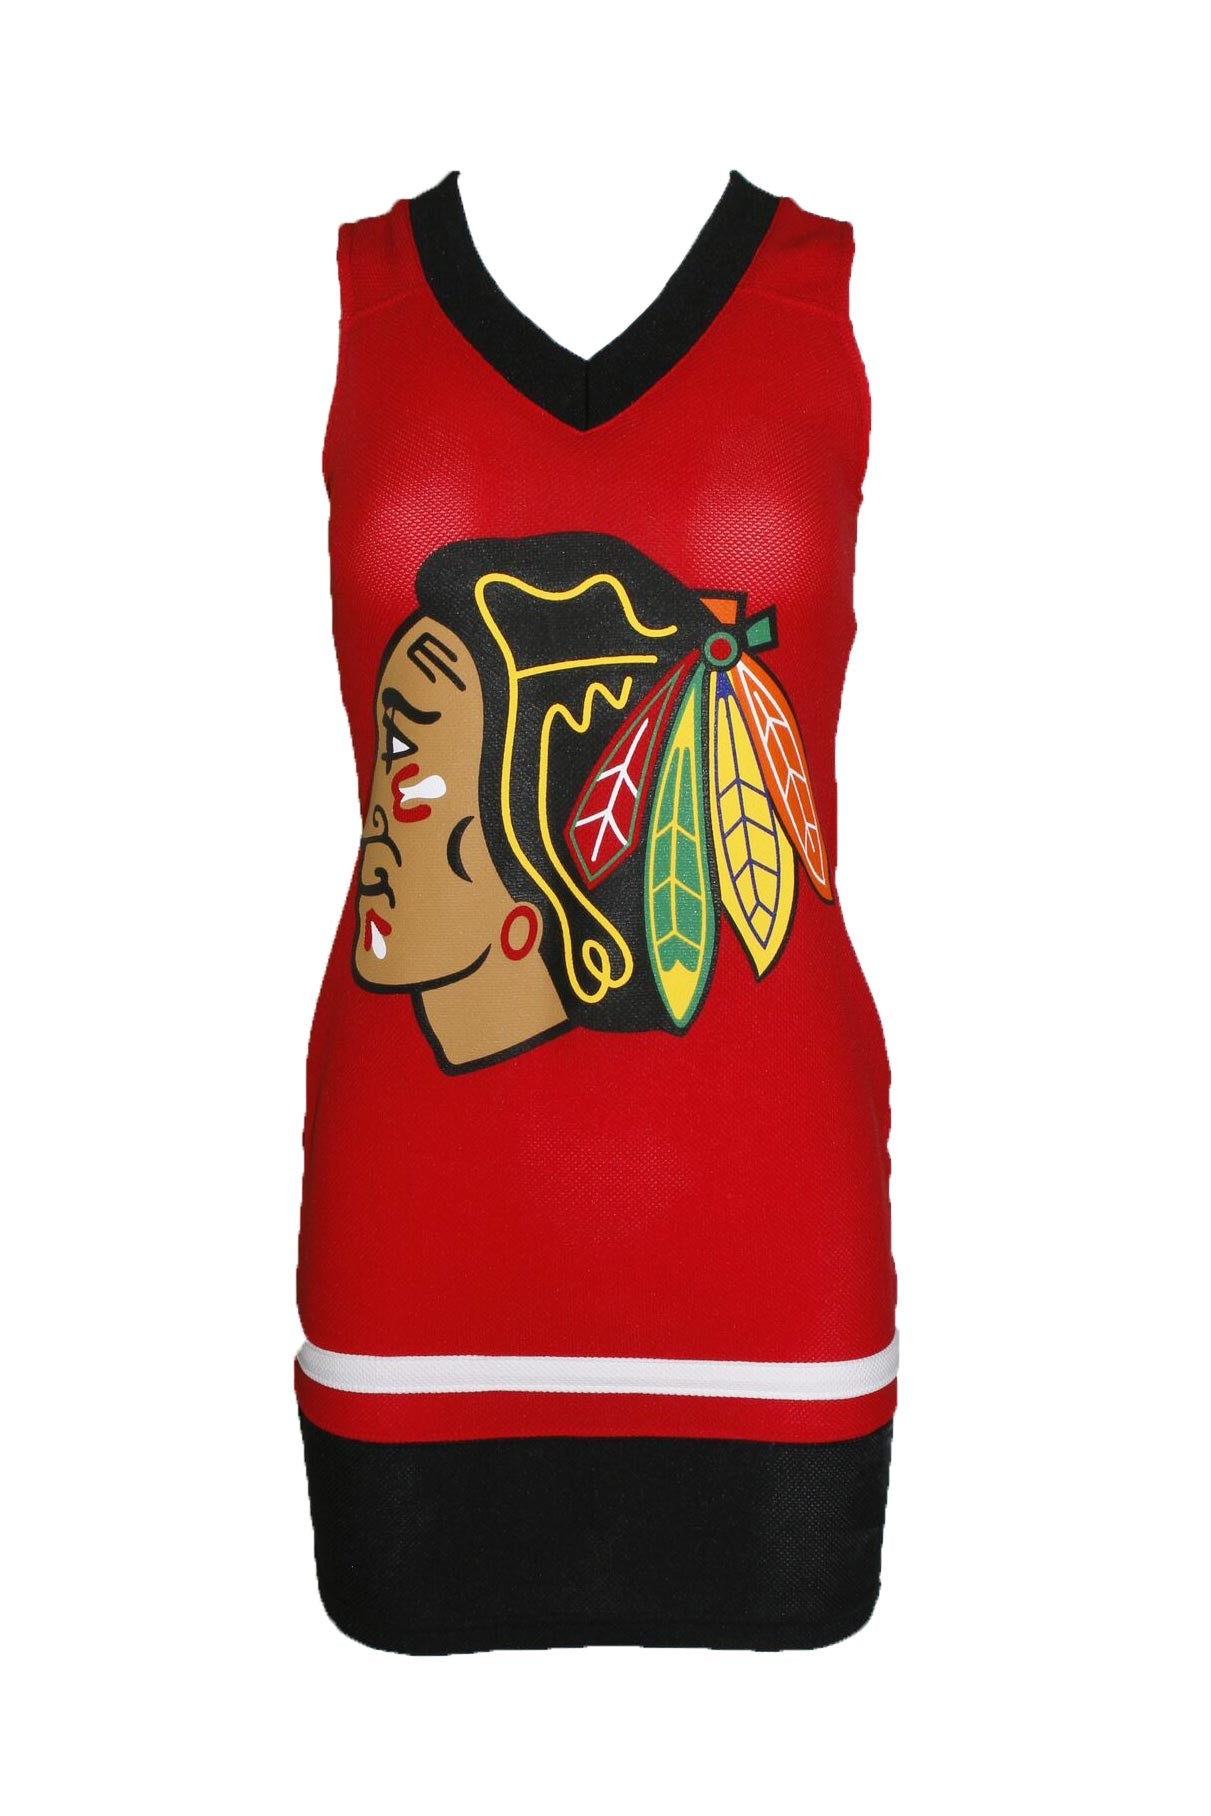 chicago blackhawks jersey dress